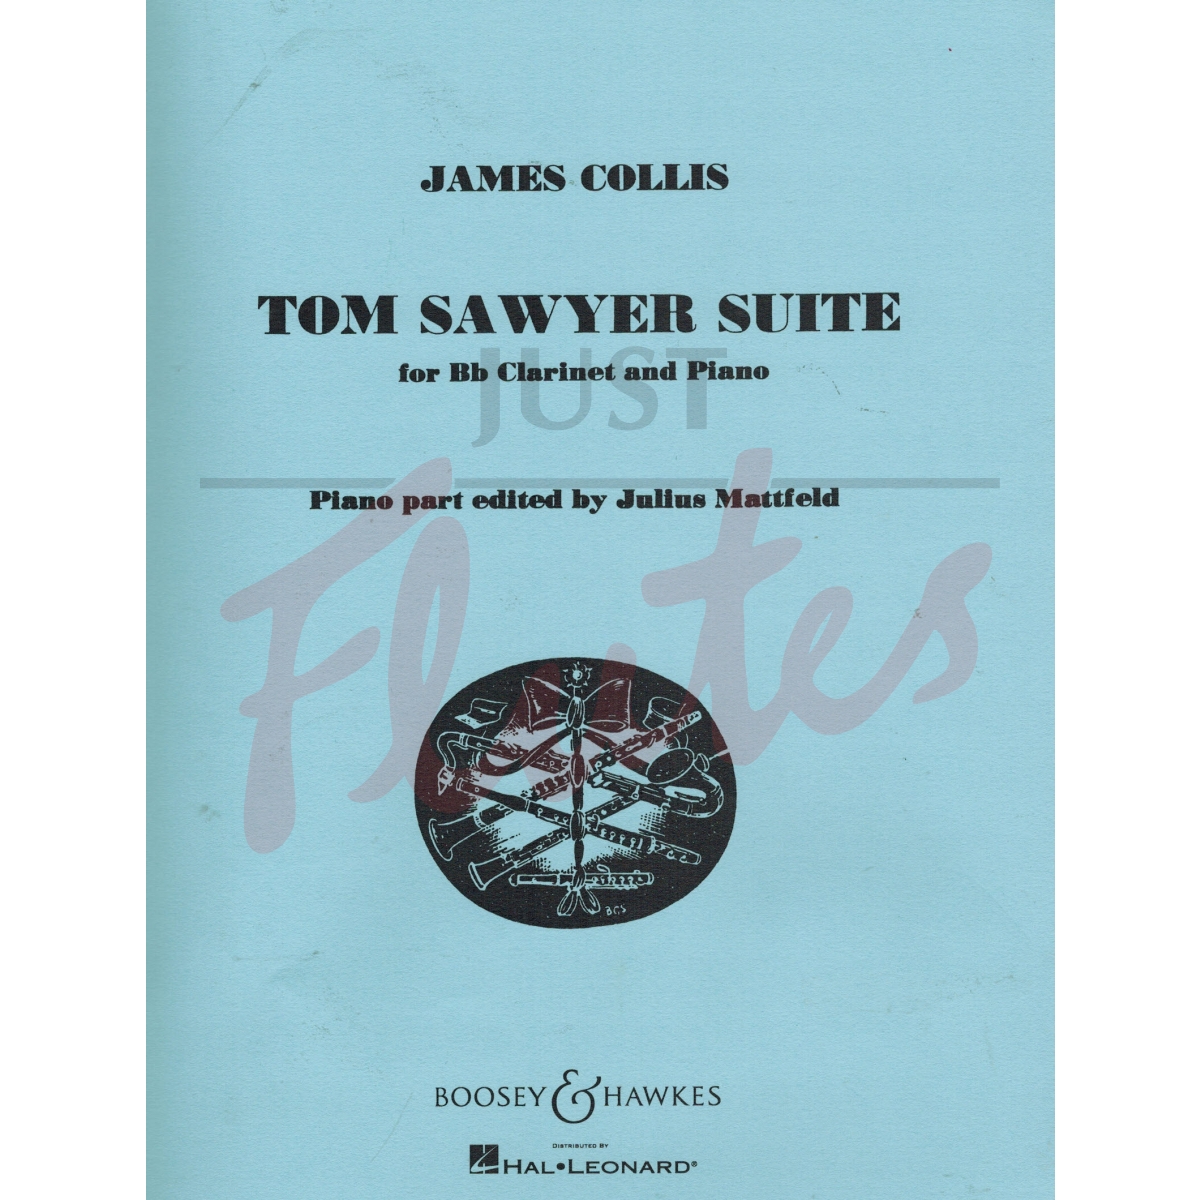 Tom Sawyer Suite